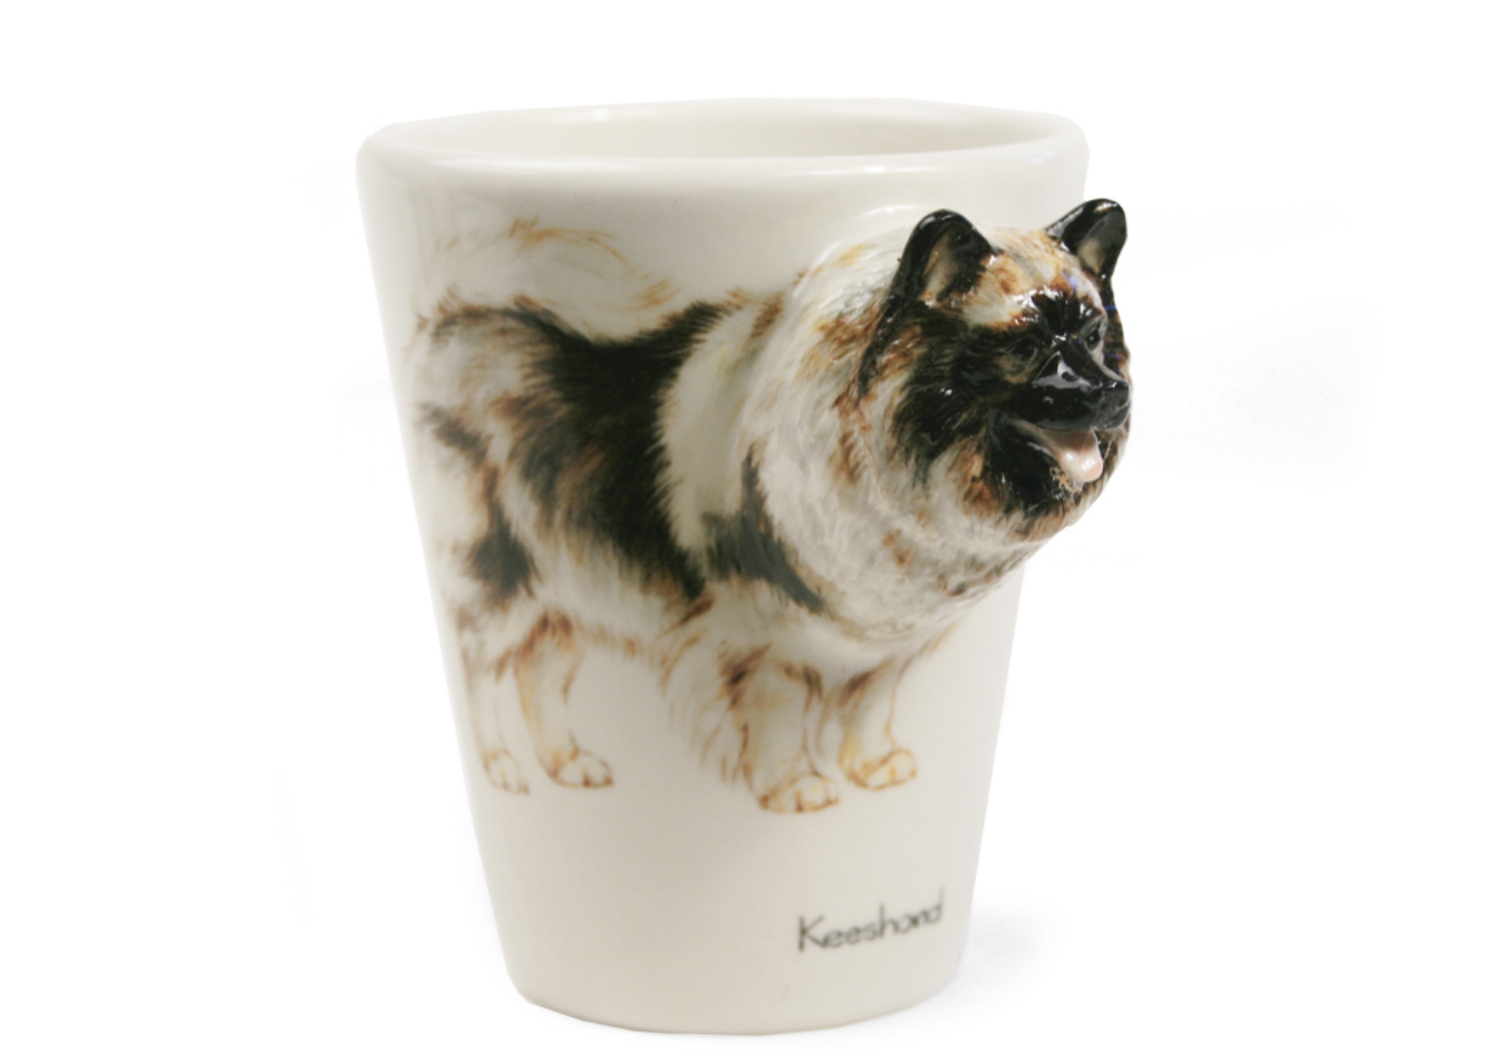 Keeshond Coffee Mug